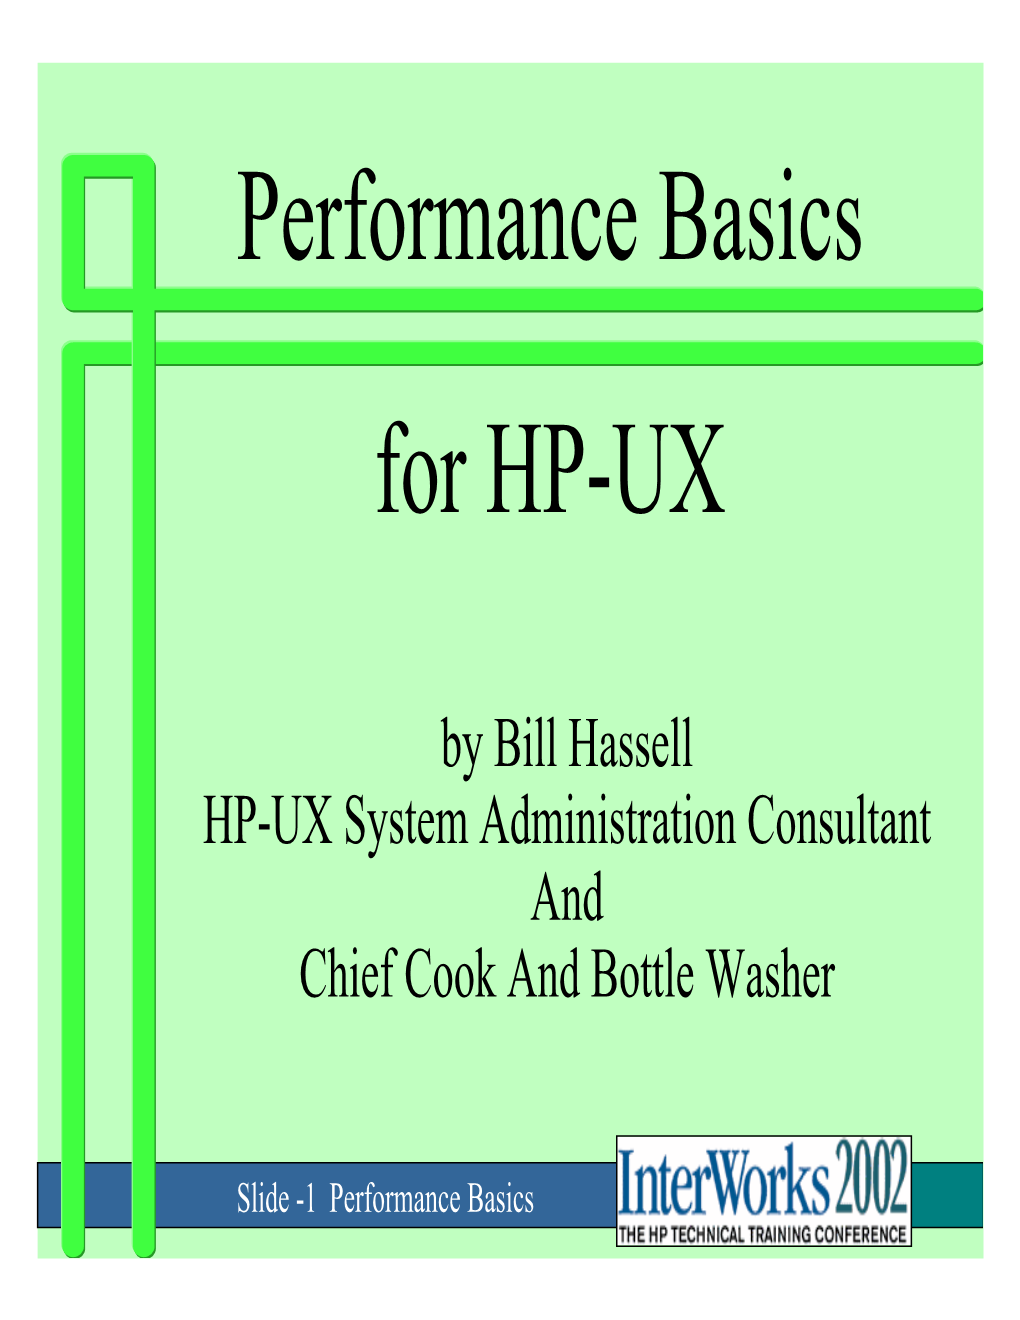 Performance Basics for HP-UX